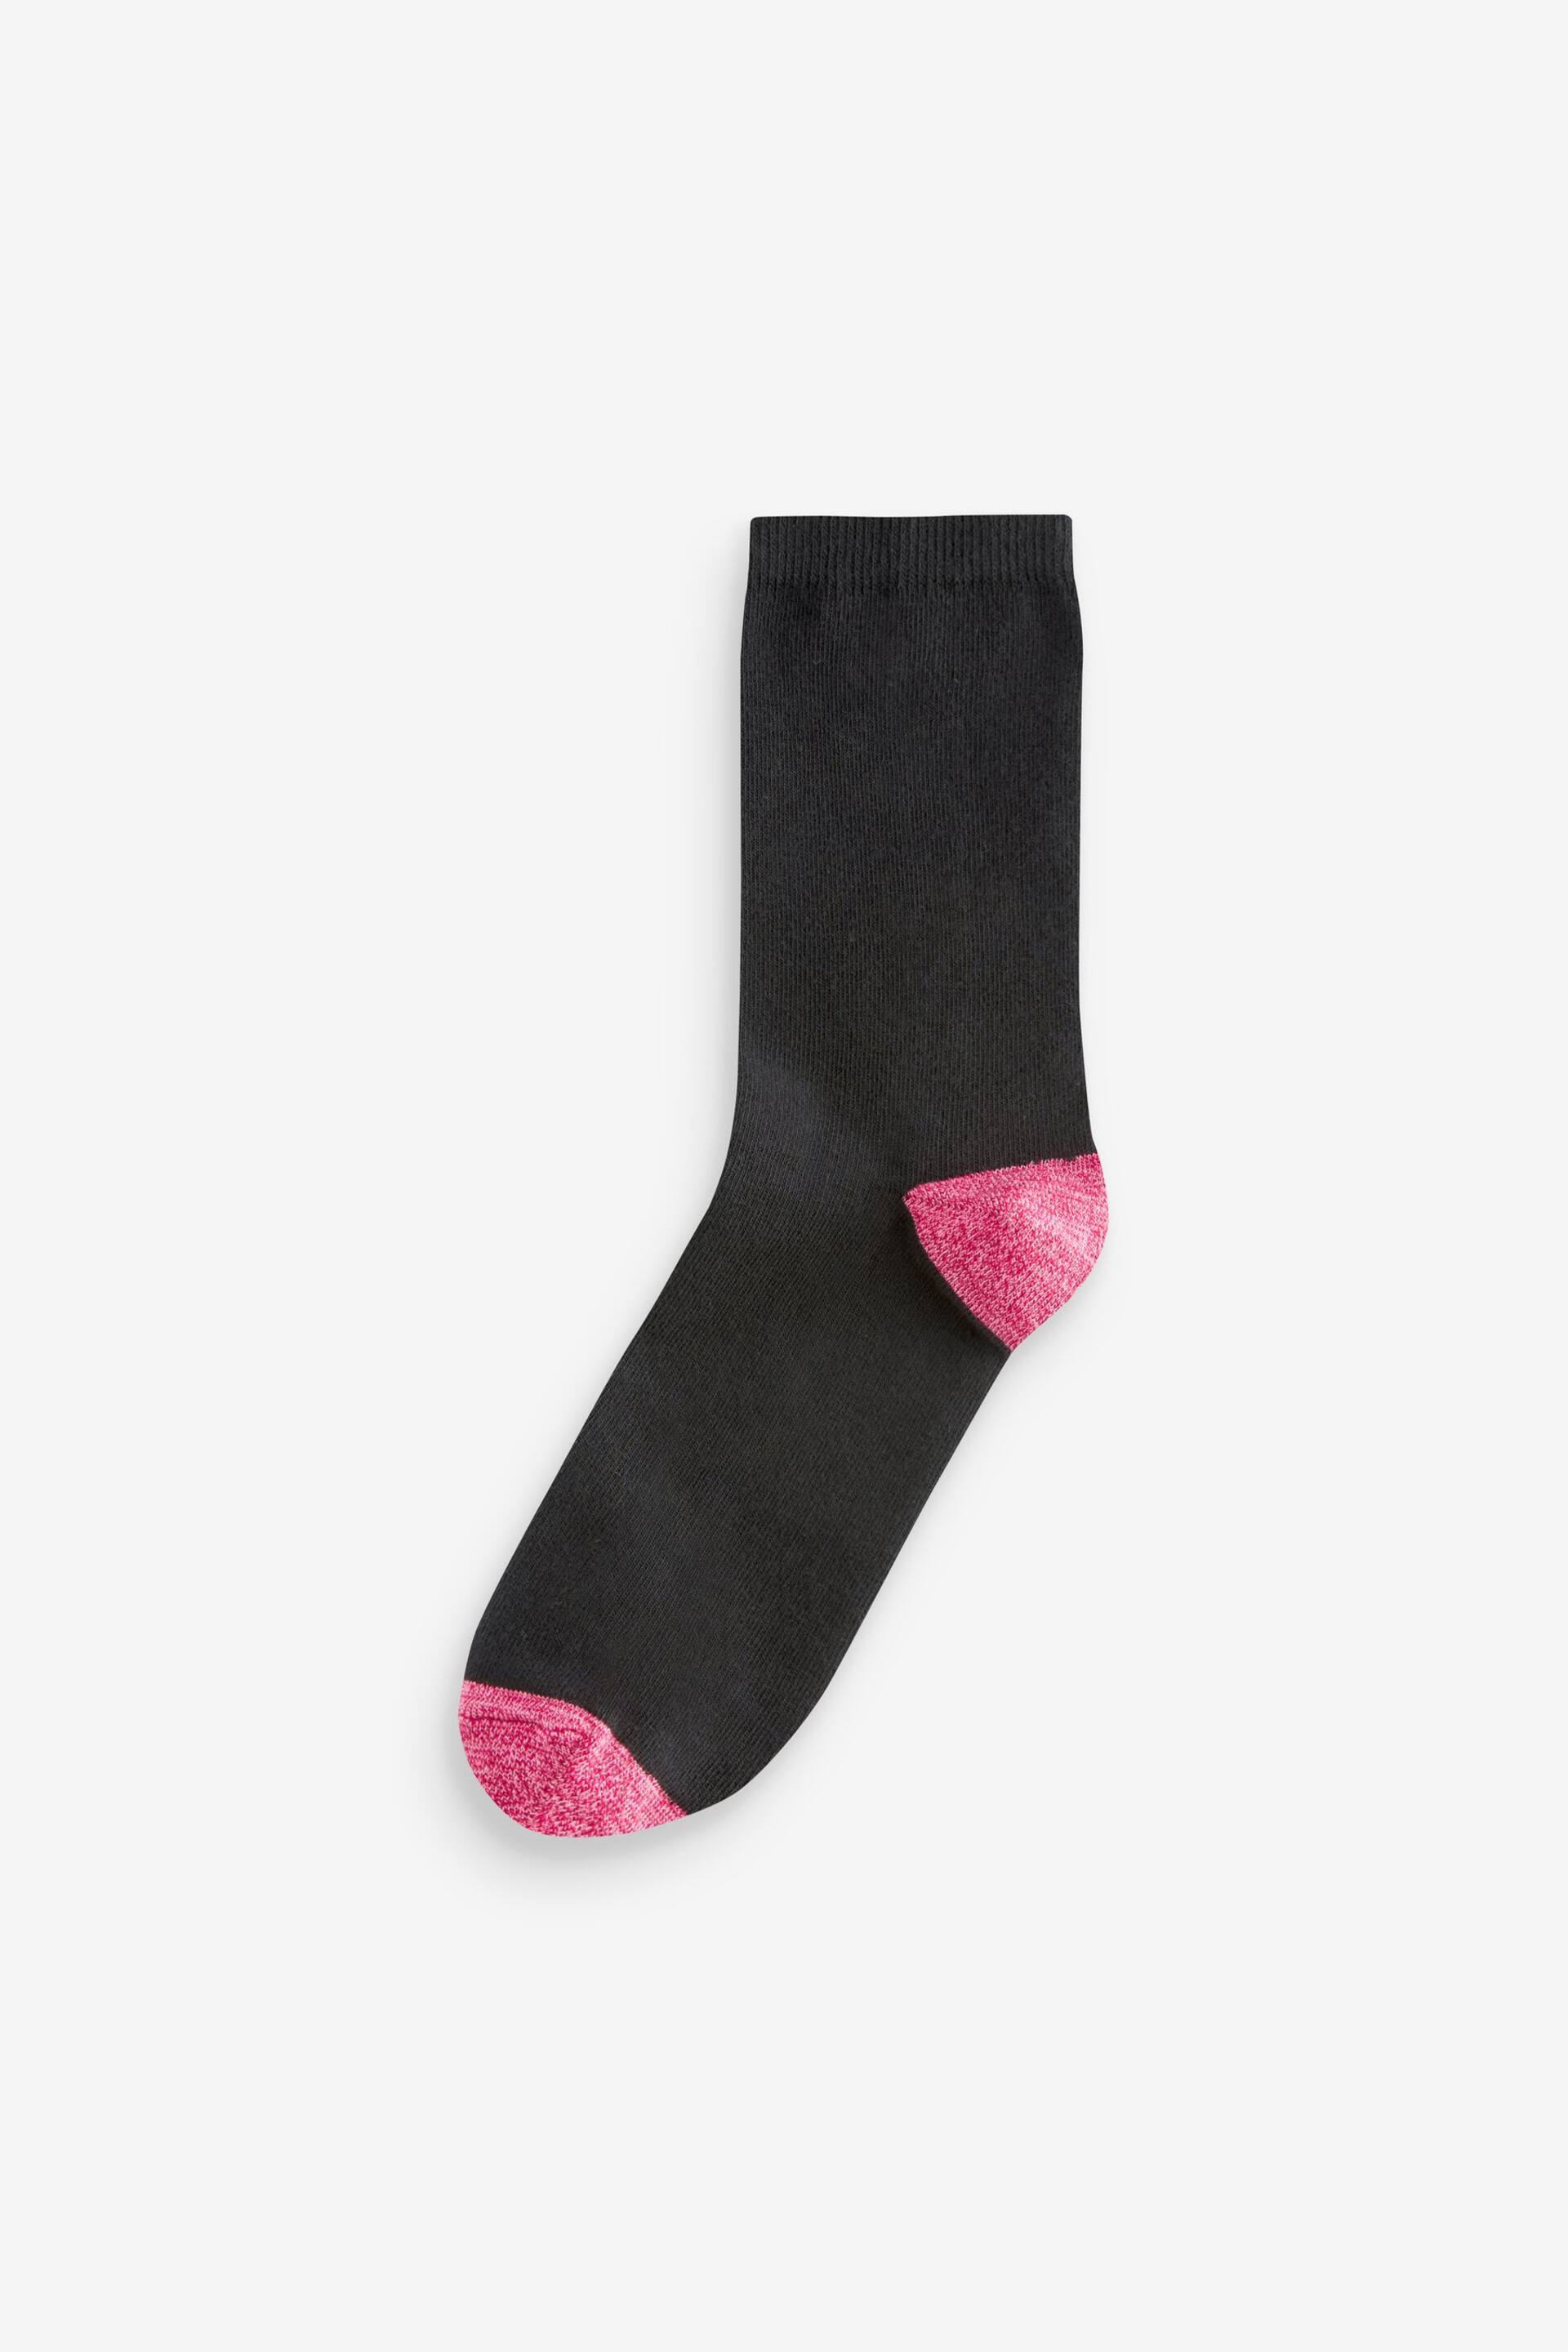 Black Ankle Socks 4 Pack - Image 3 of 5